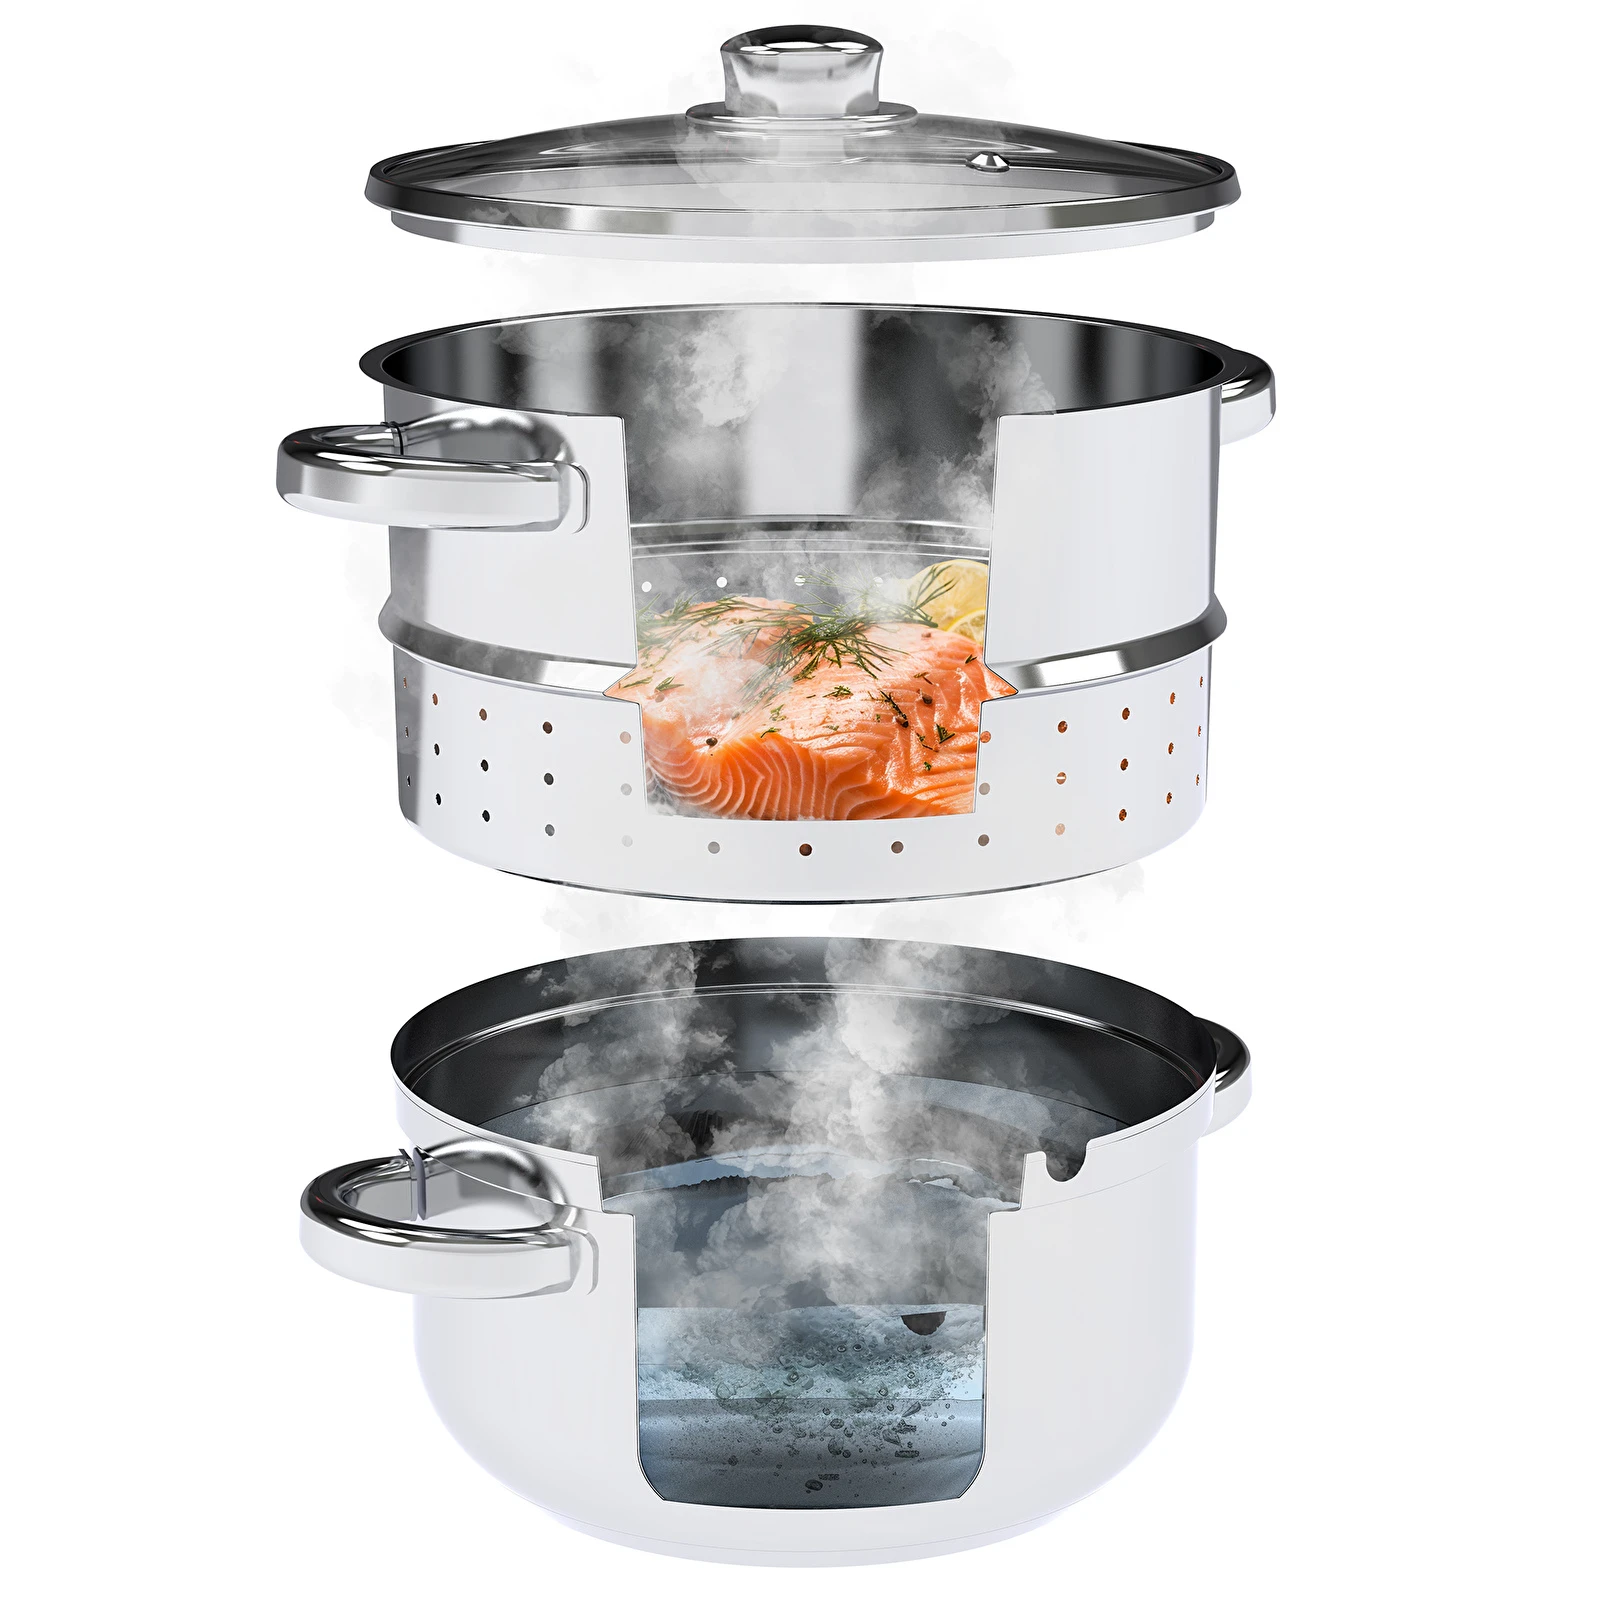 https://browin.com/static/images/1600/5-2-l-stainless-steel-steam-juicer-with-setam-cooker-800505_b.webp